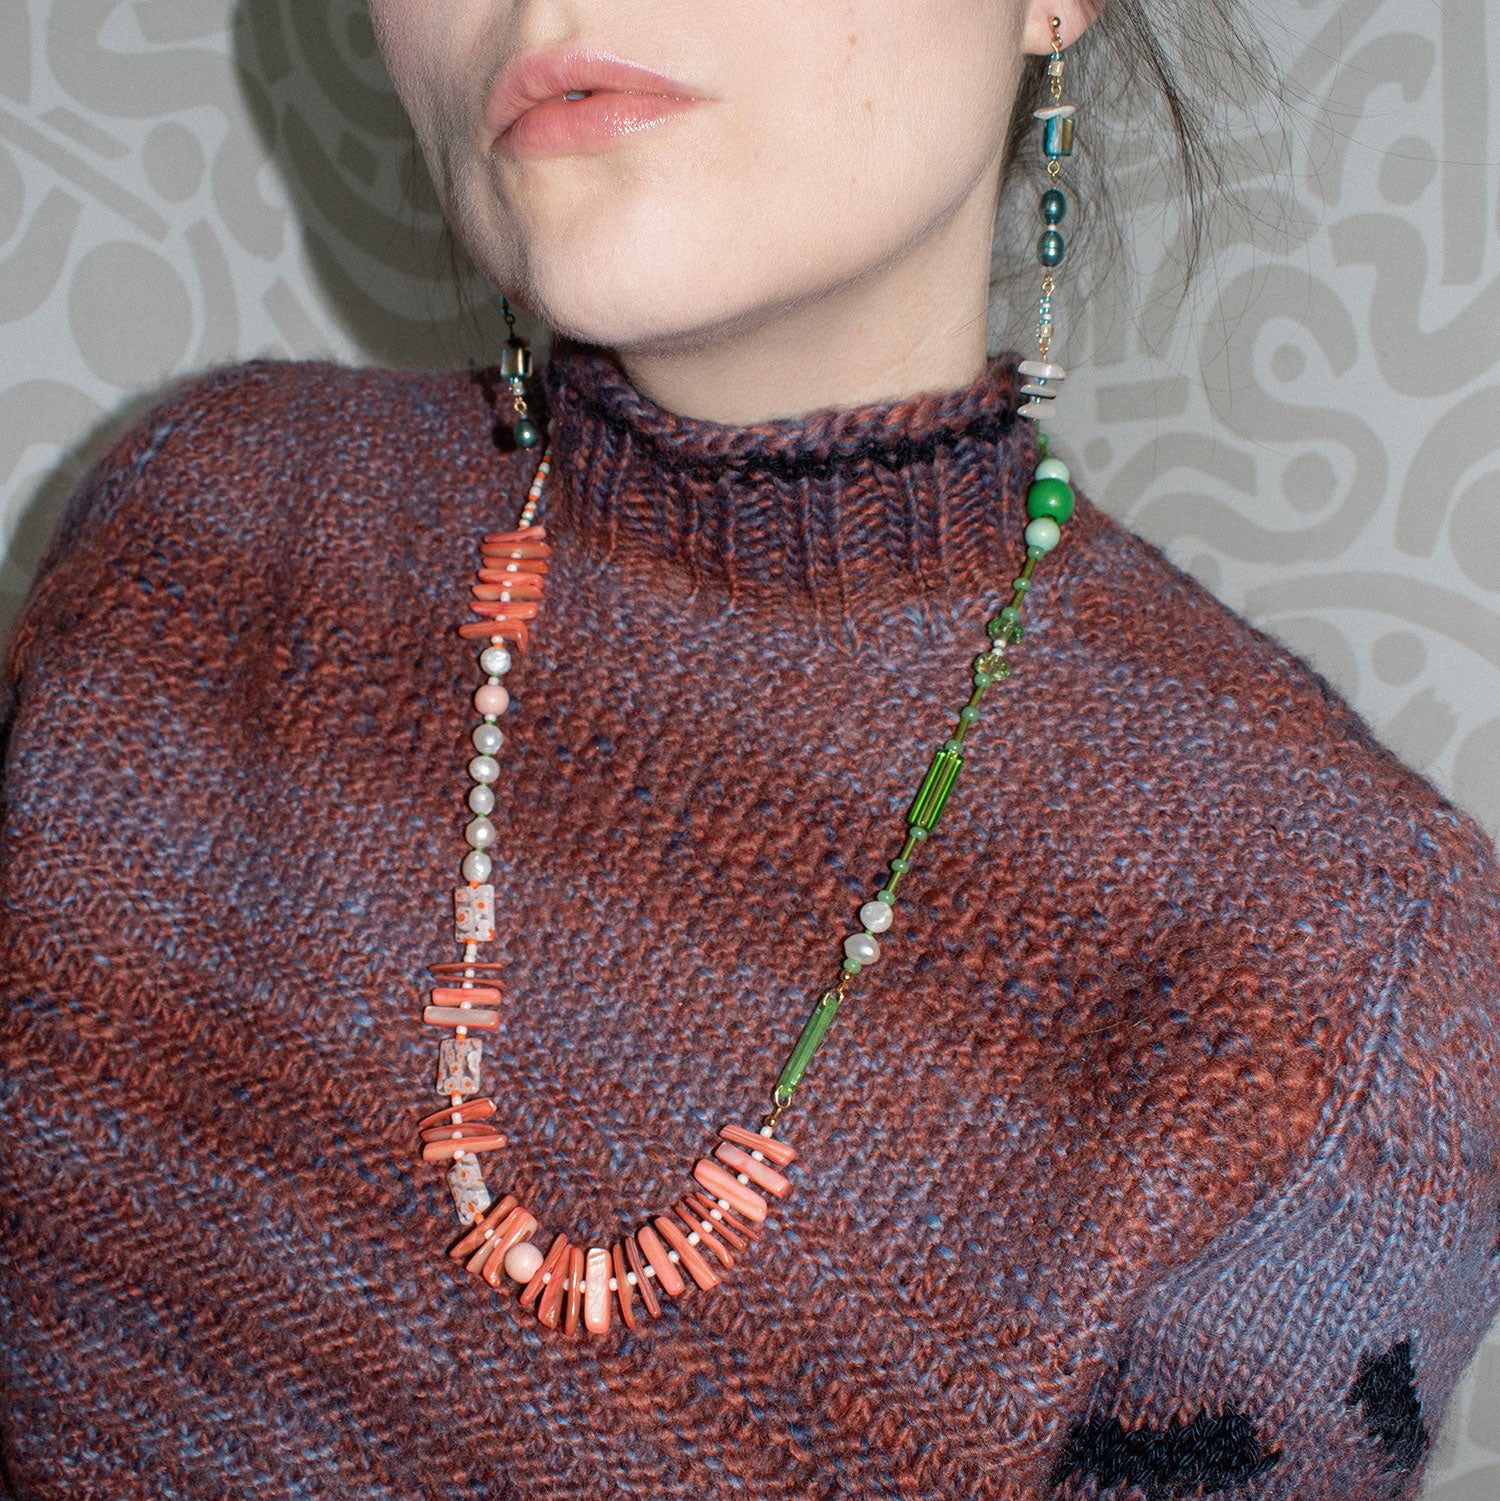 Firenze Coral & Green Millefiori Long Necklace